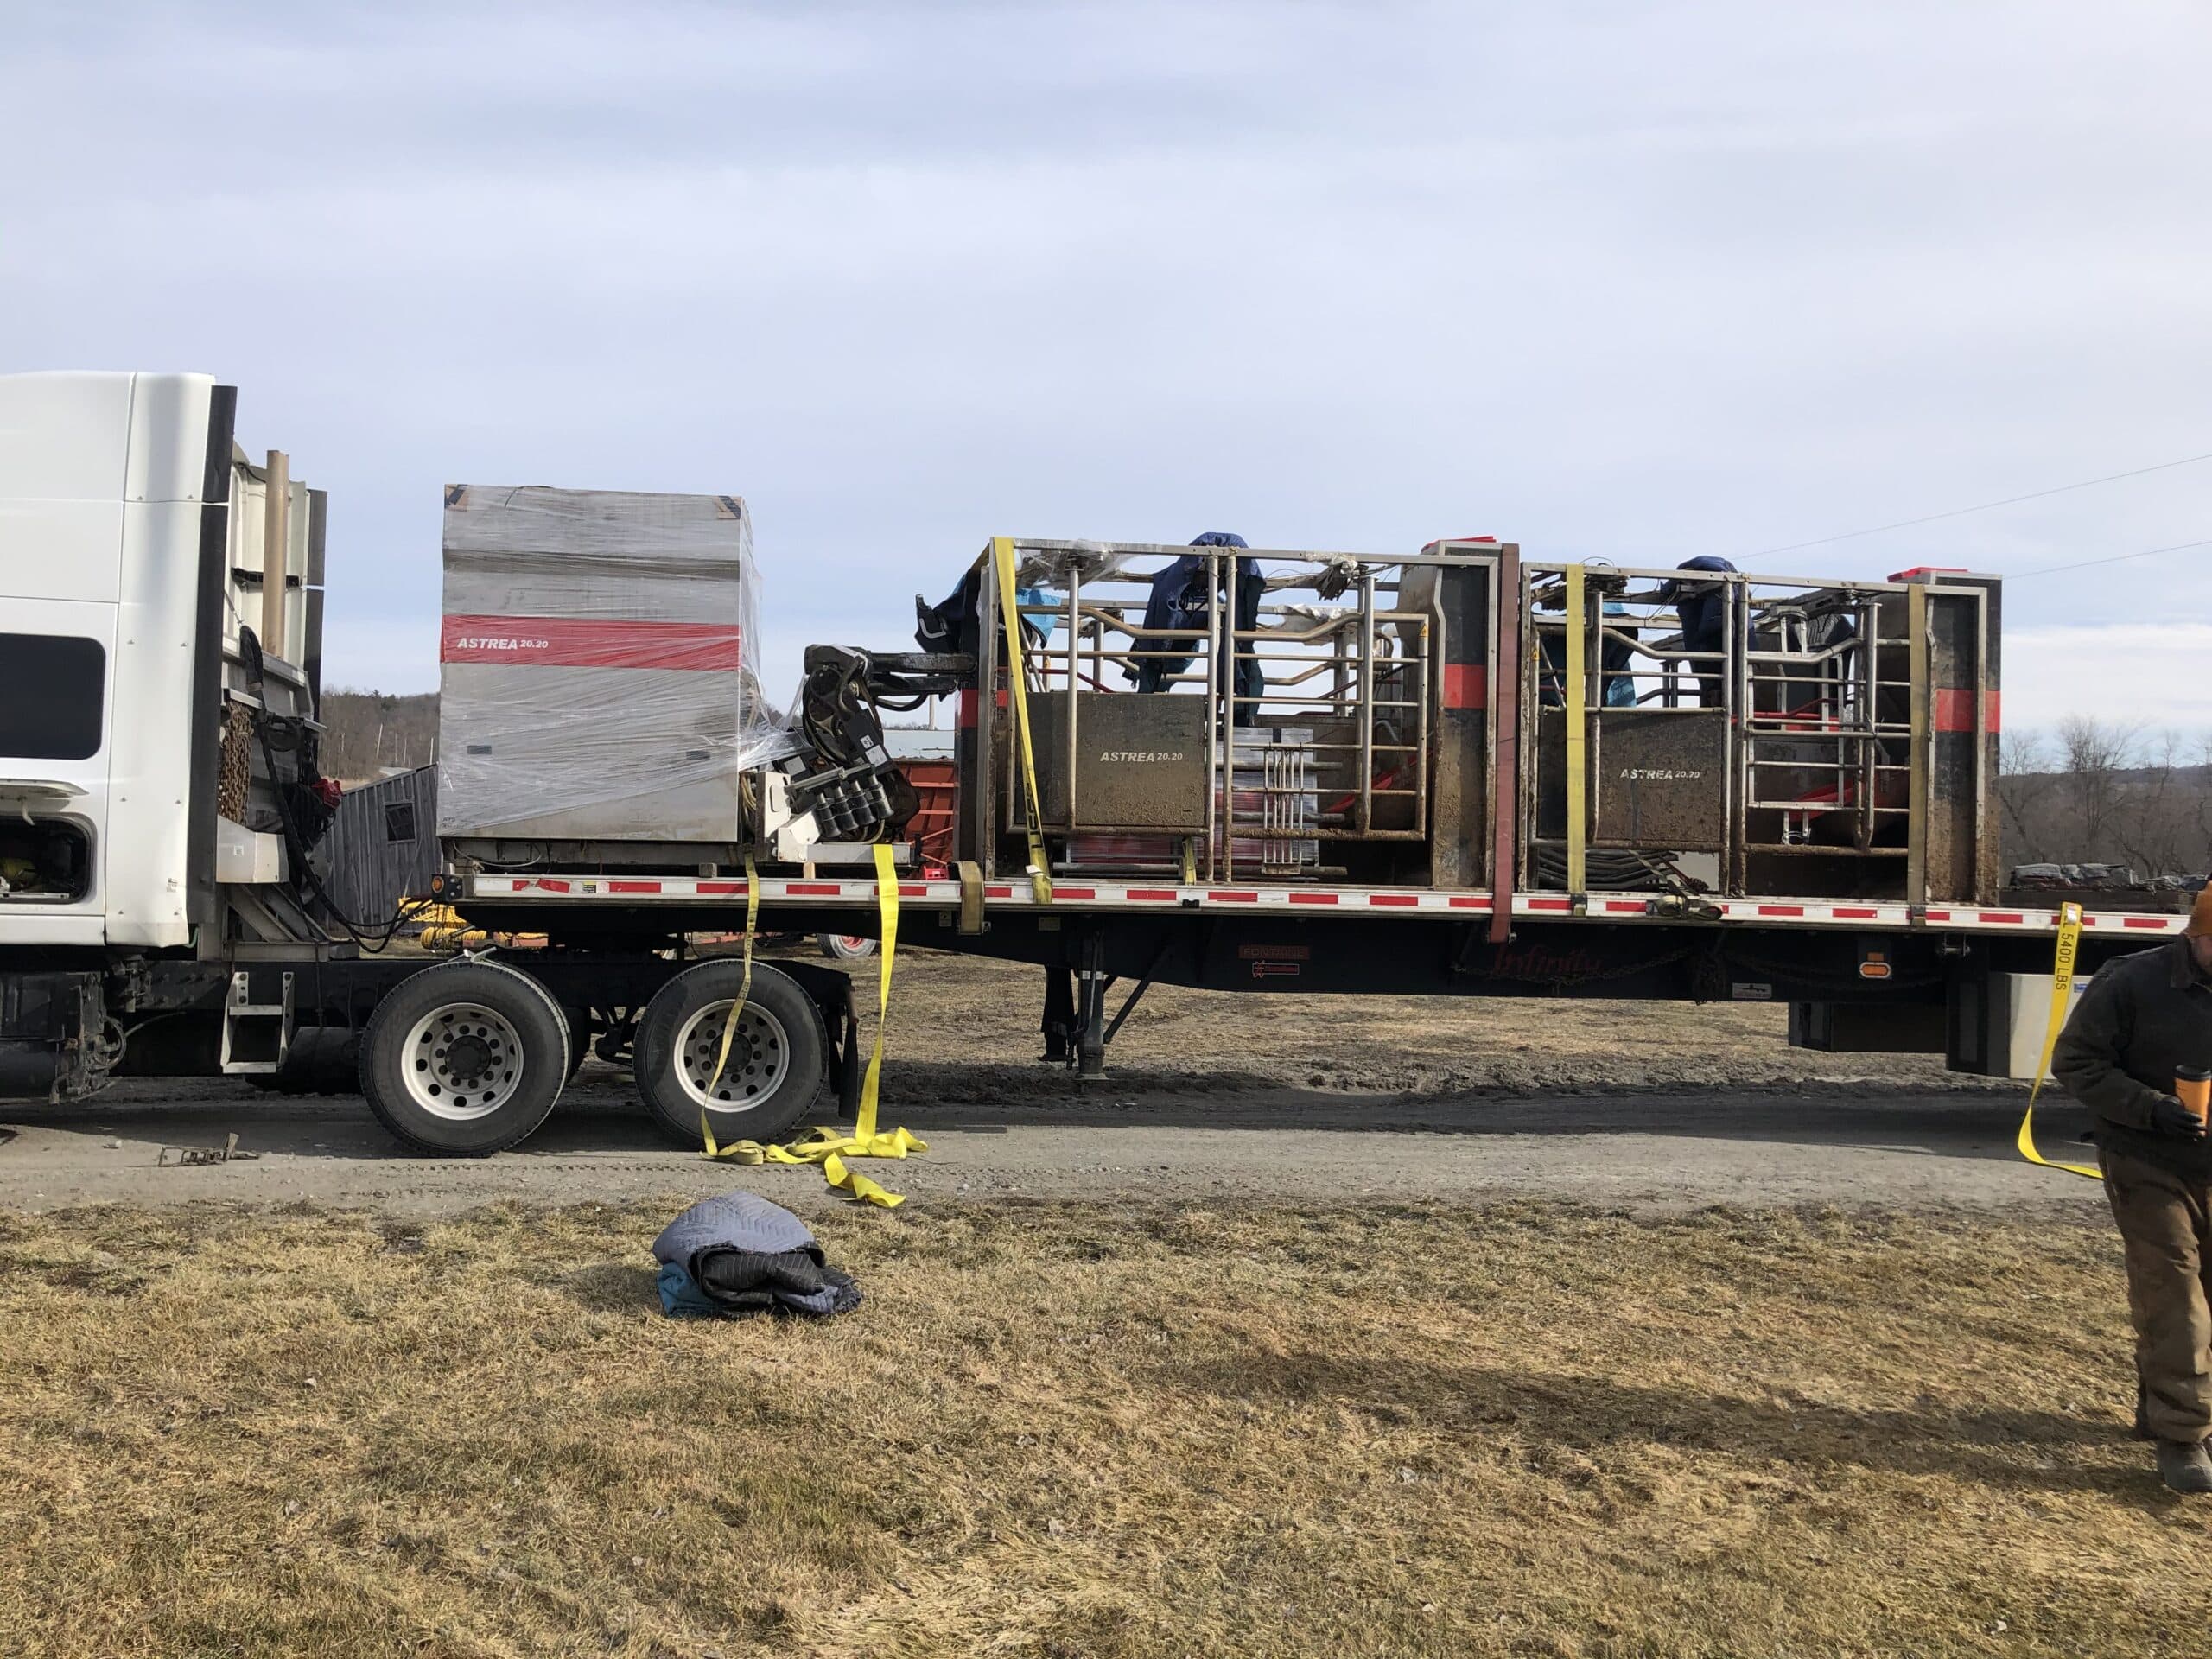 Milking system loaded for transport on a flatbed trailer